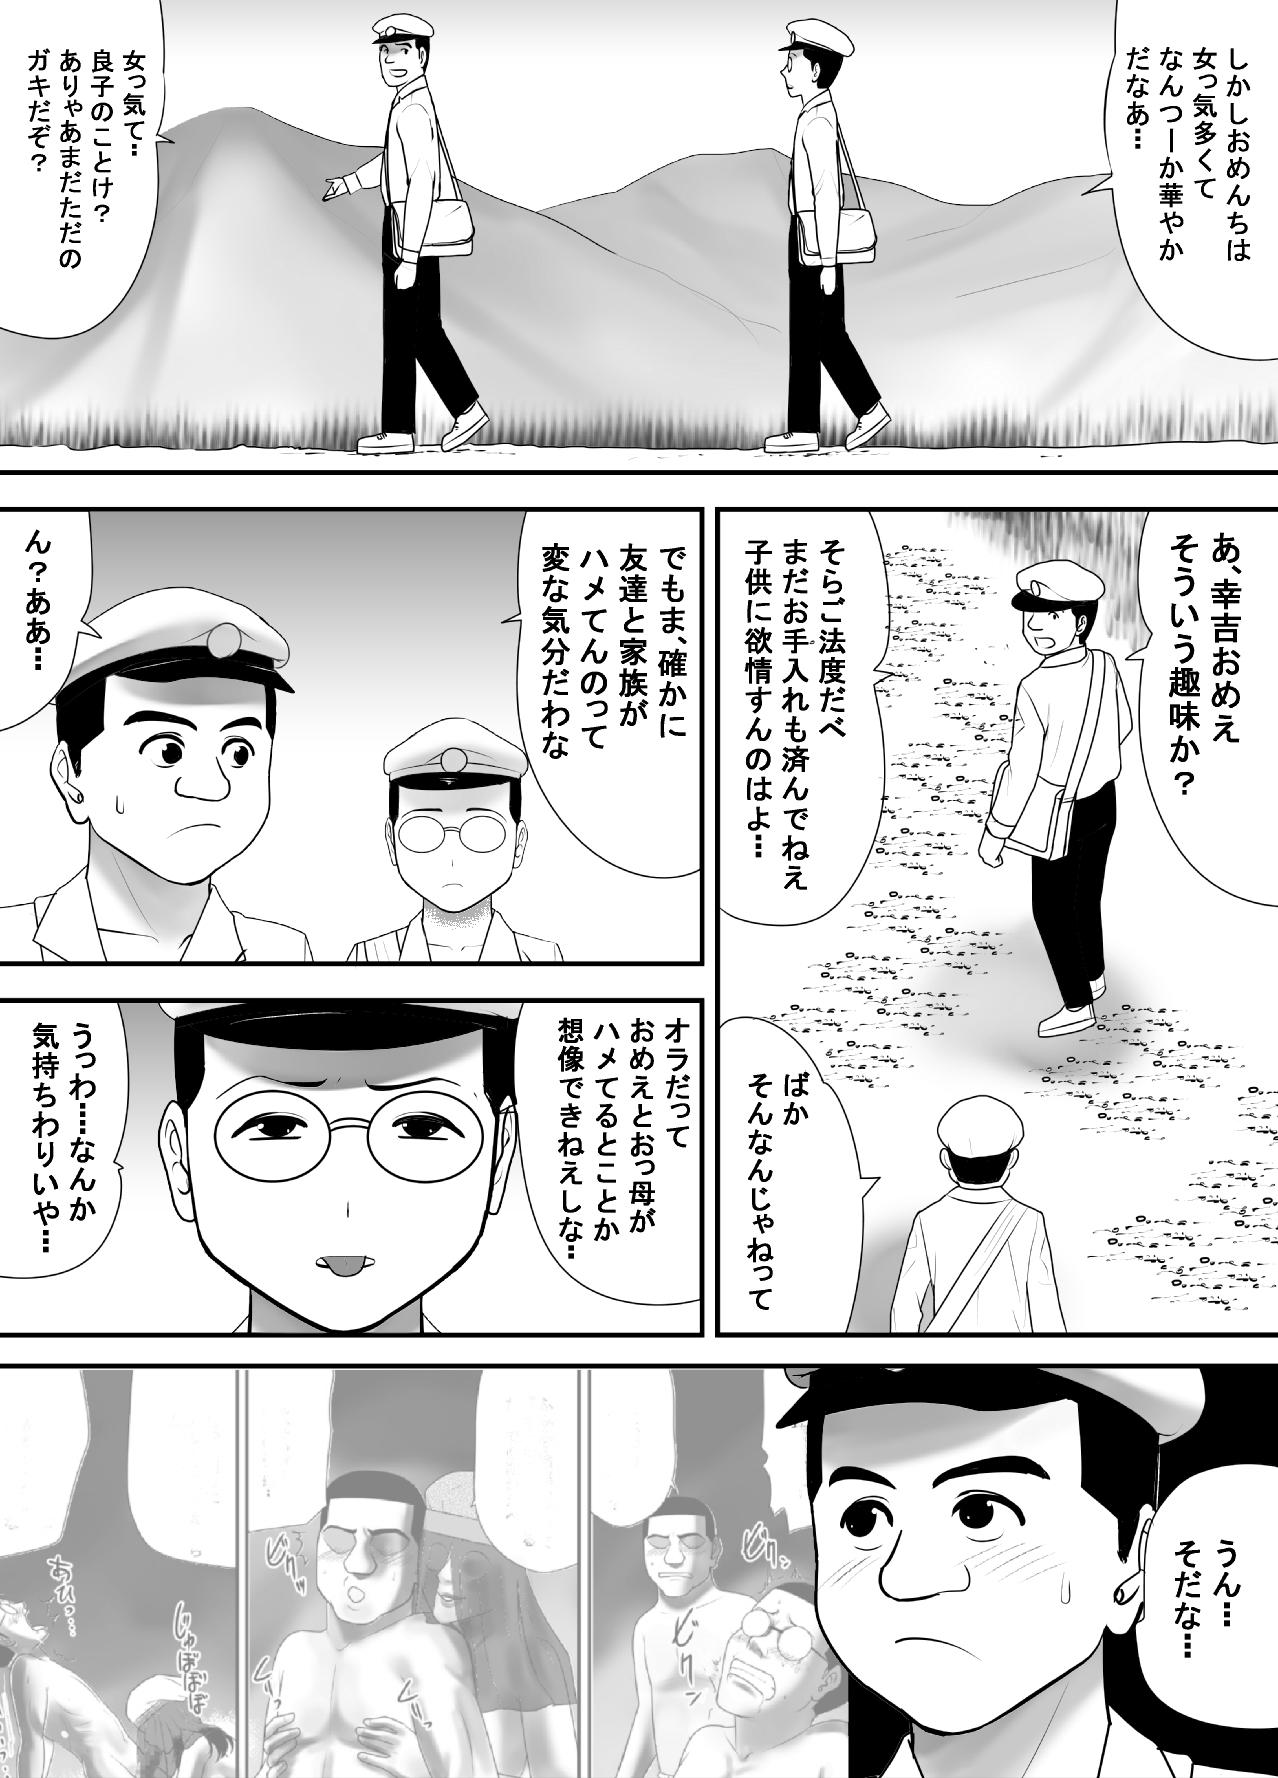 Webcams Subete o Ukeirete Kureru Tomodachi no Okka-san - Original Muslim - Page 7